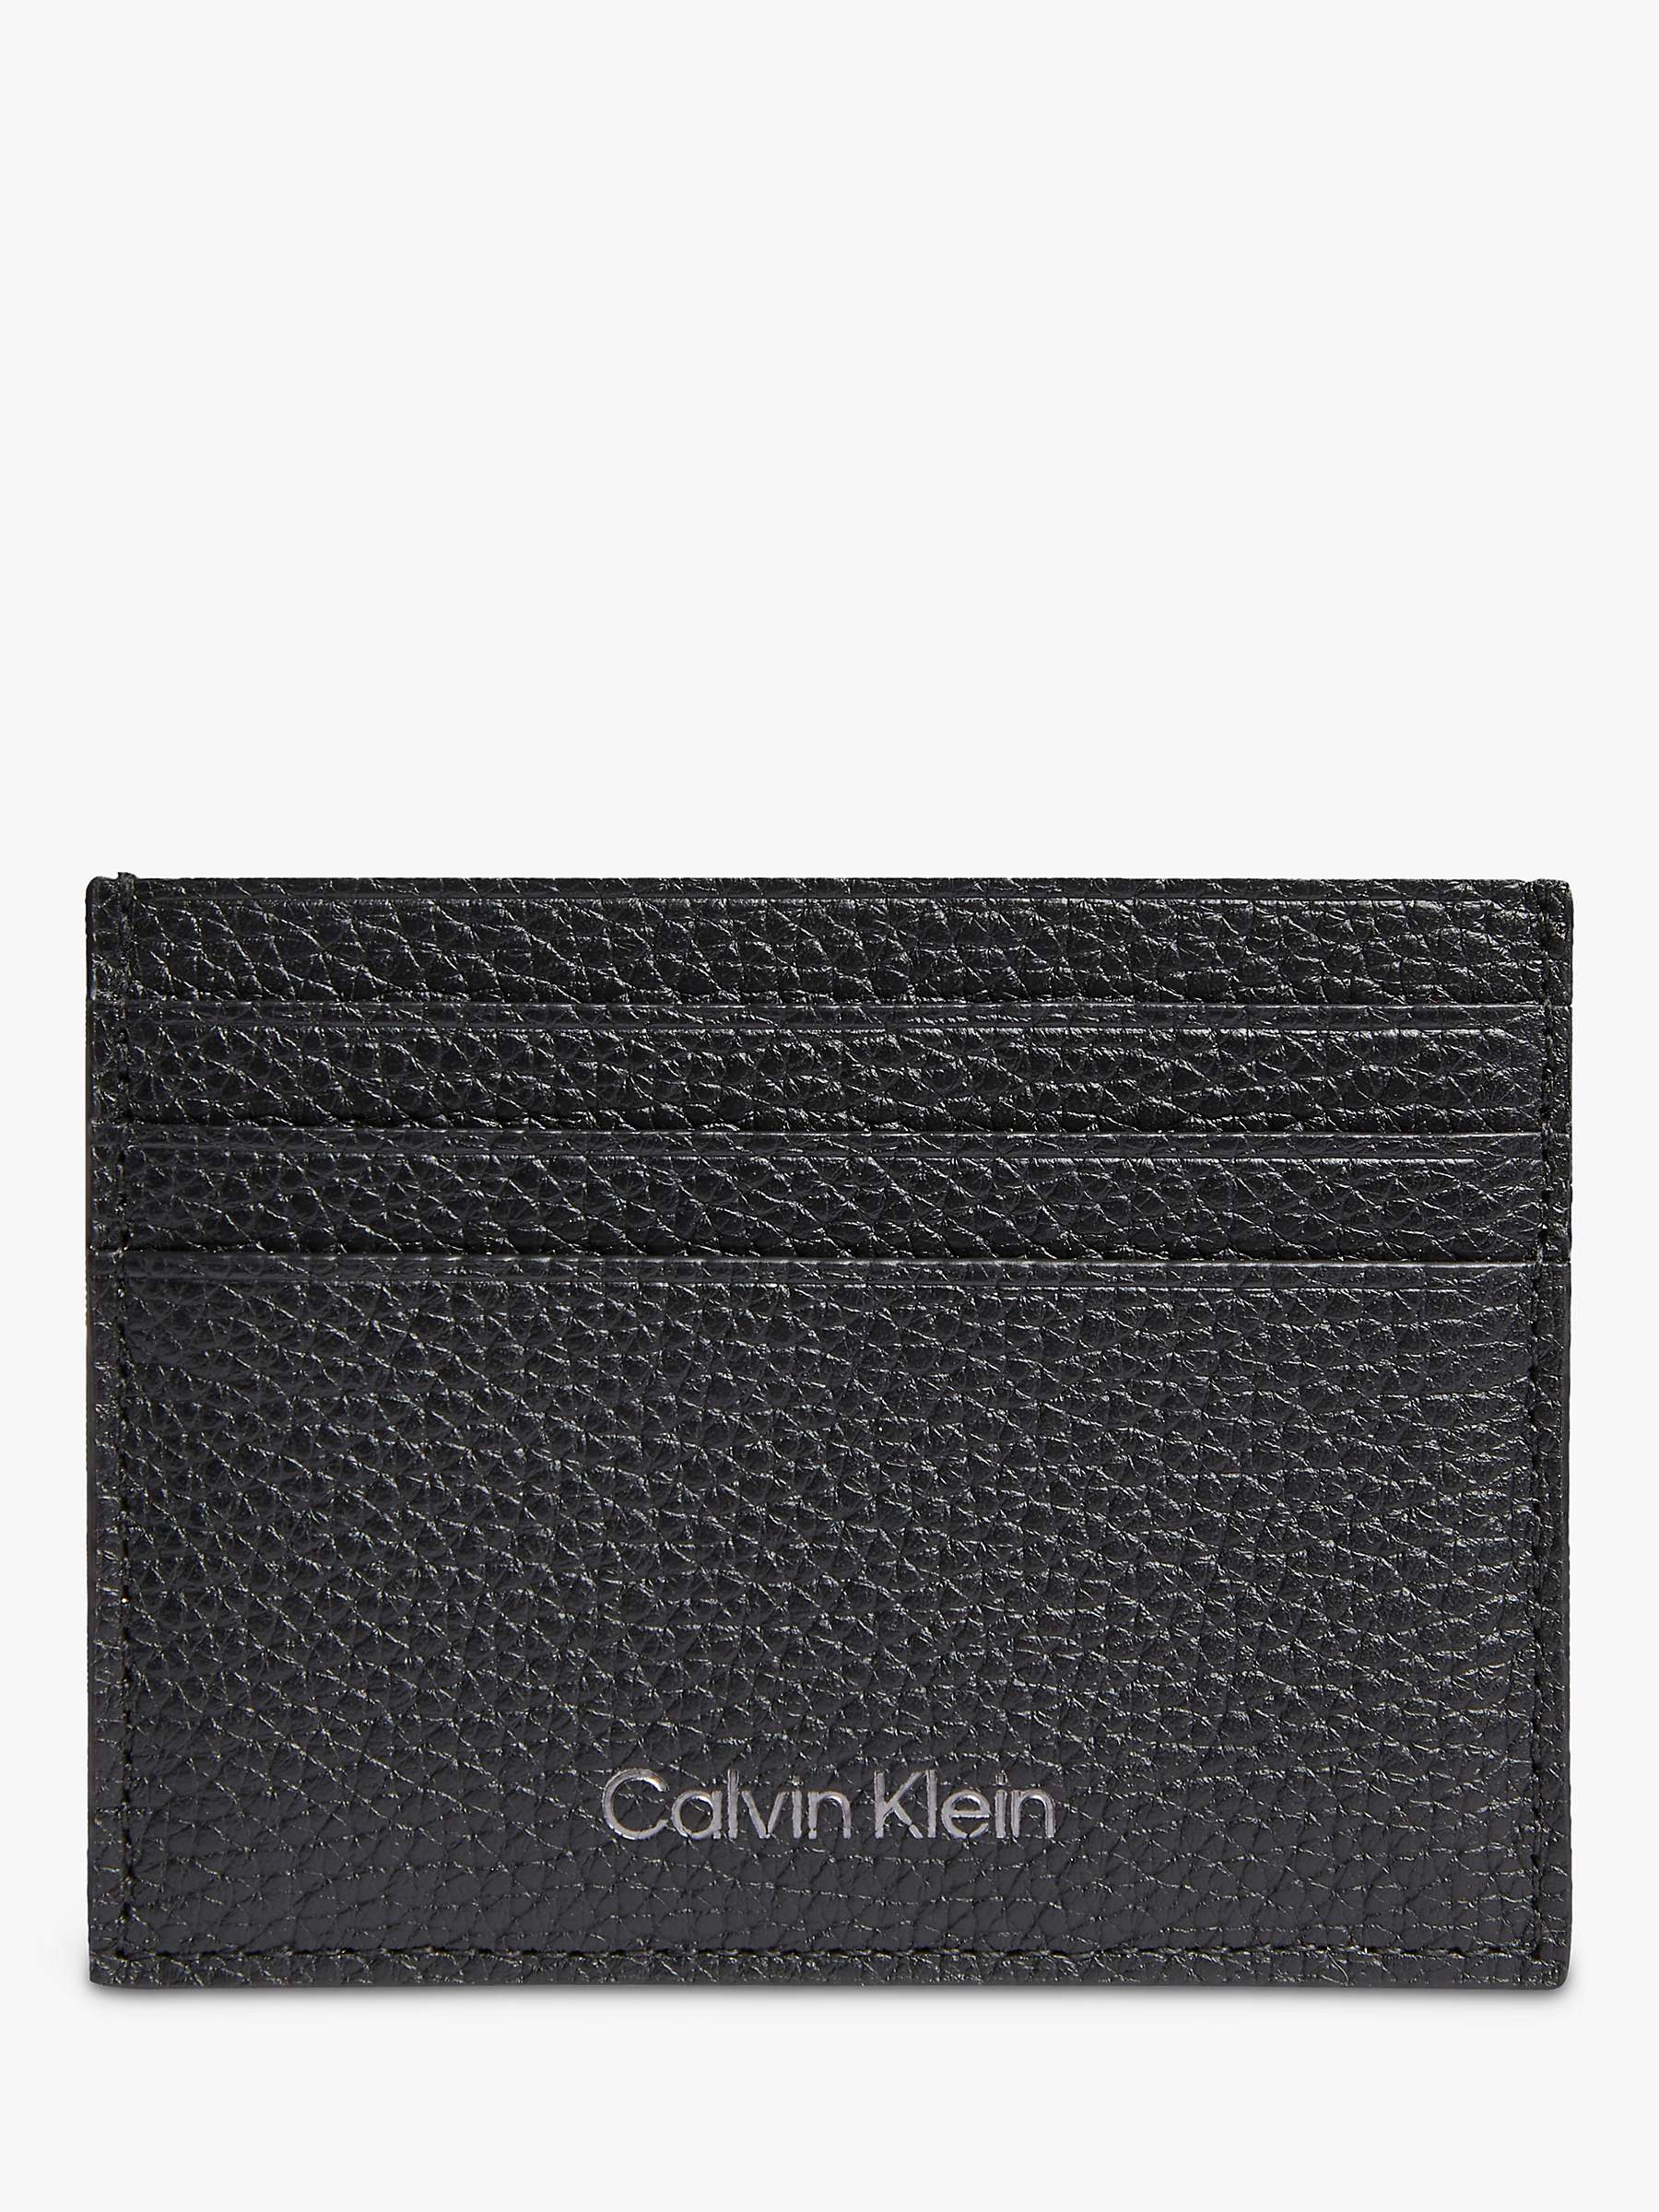 Calvin Klein Warmth Leather Card Holder, Black at John Lewis & Partners